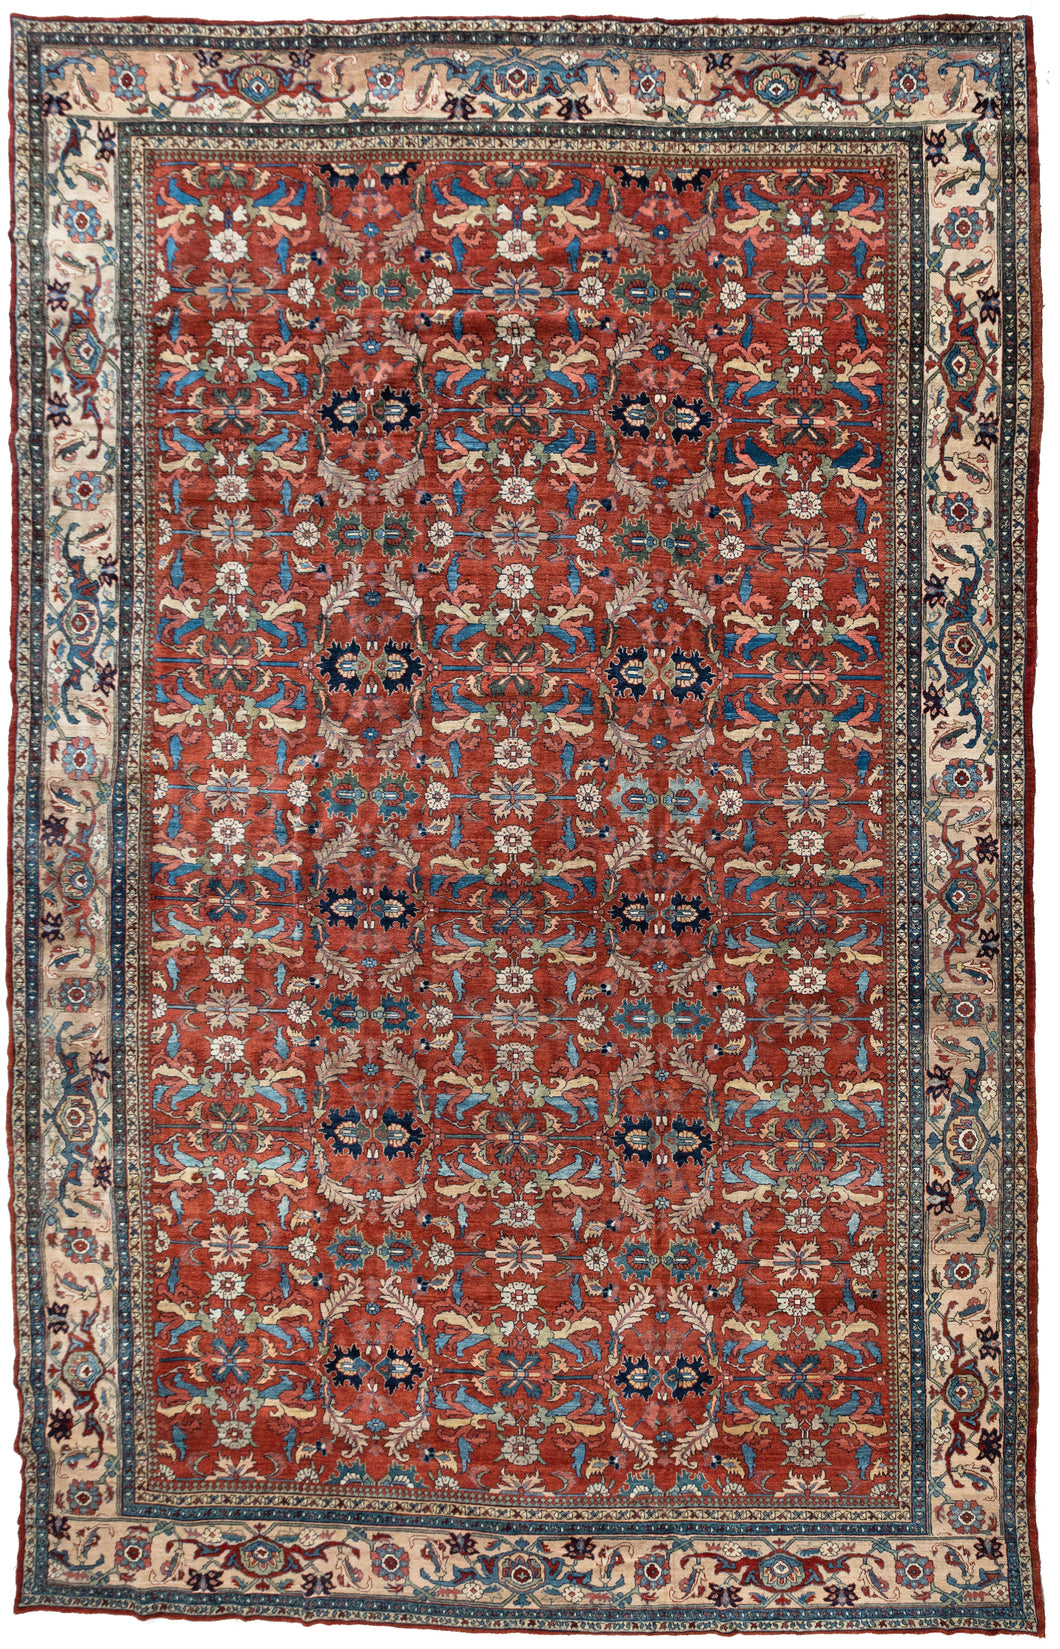 Oversize Antique Mahal Carpet